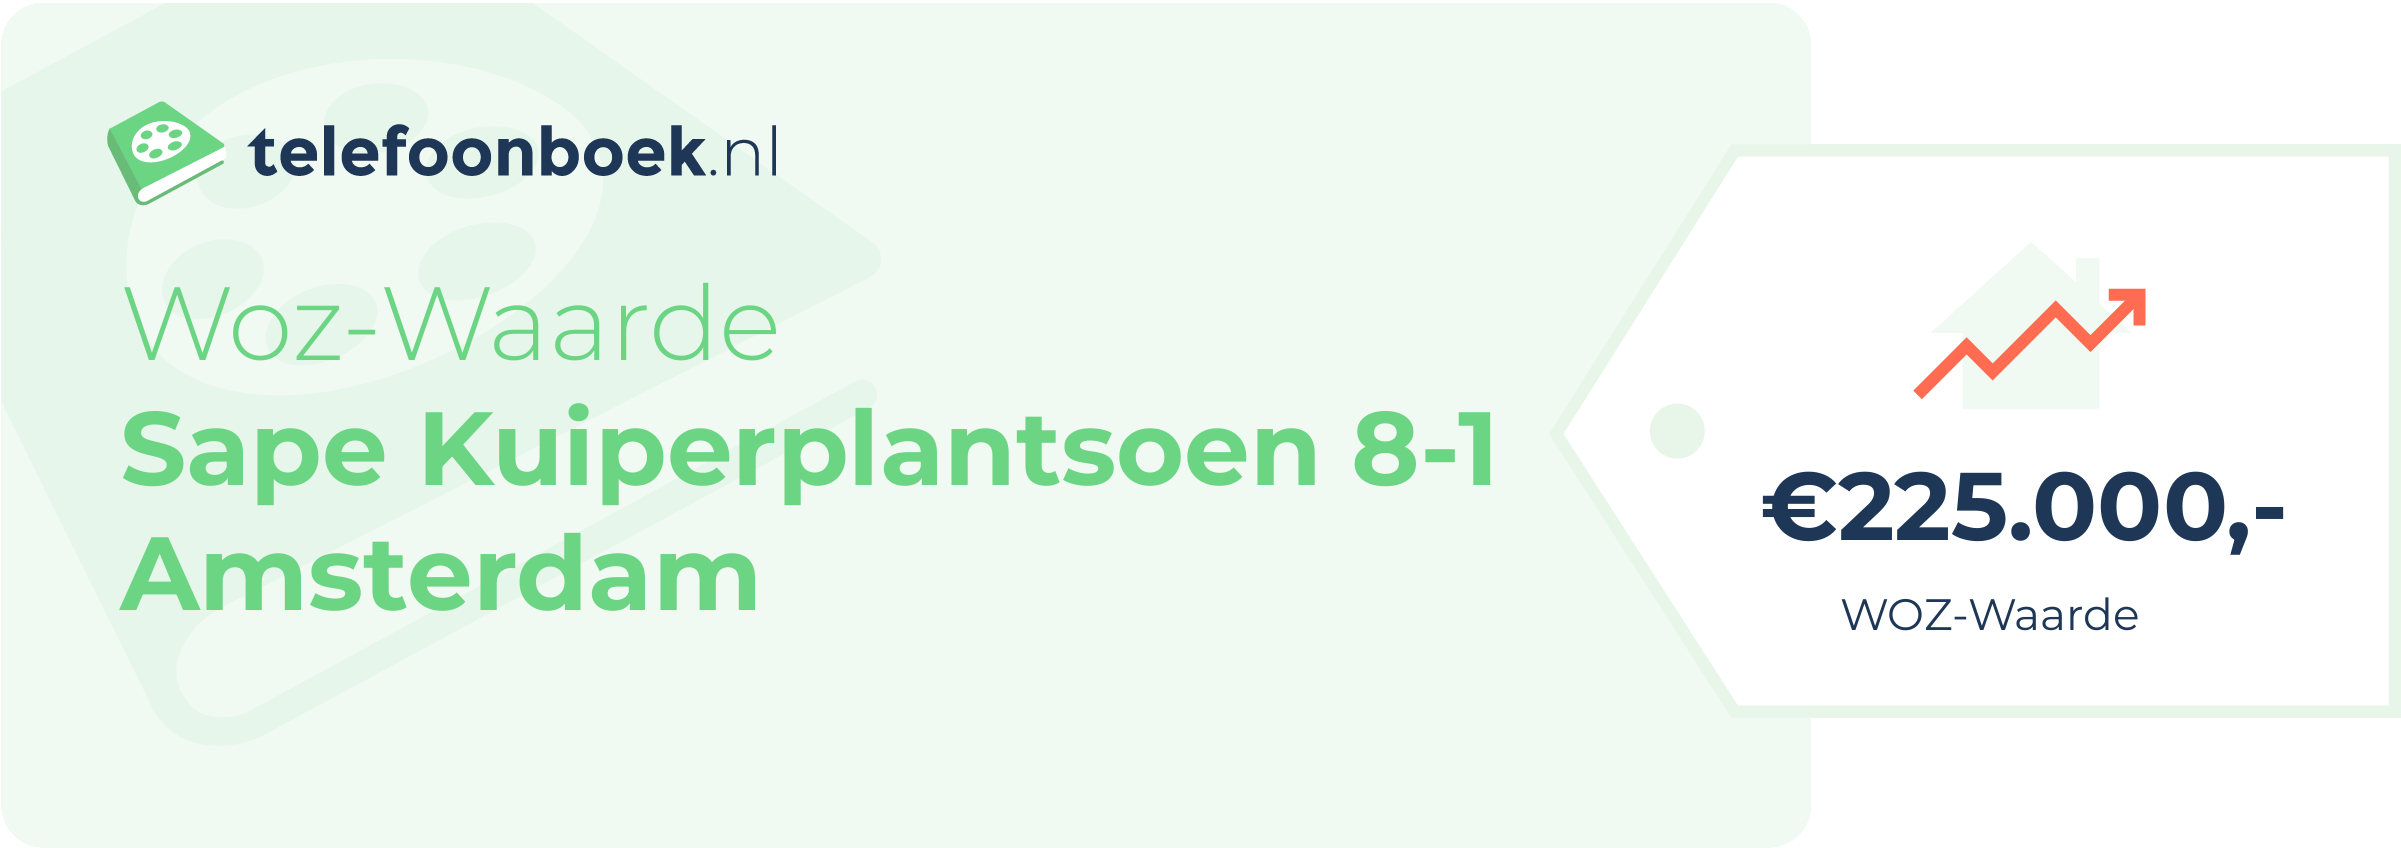 WOZ-waarde Sape Kuiperplantsoen 8-1 Amsterdam